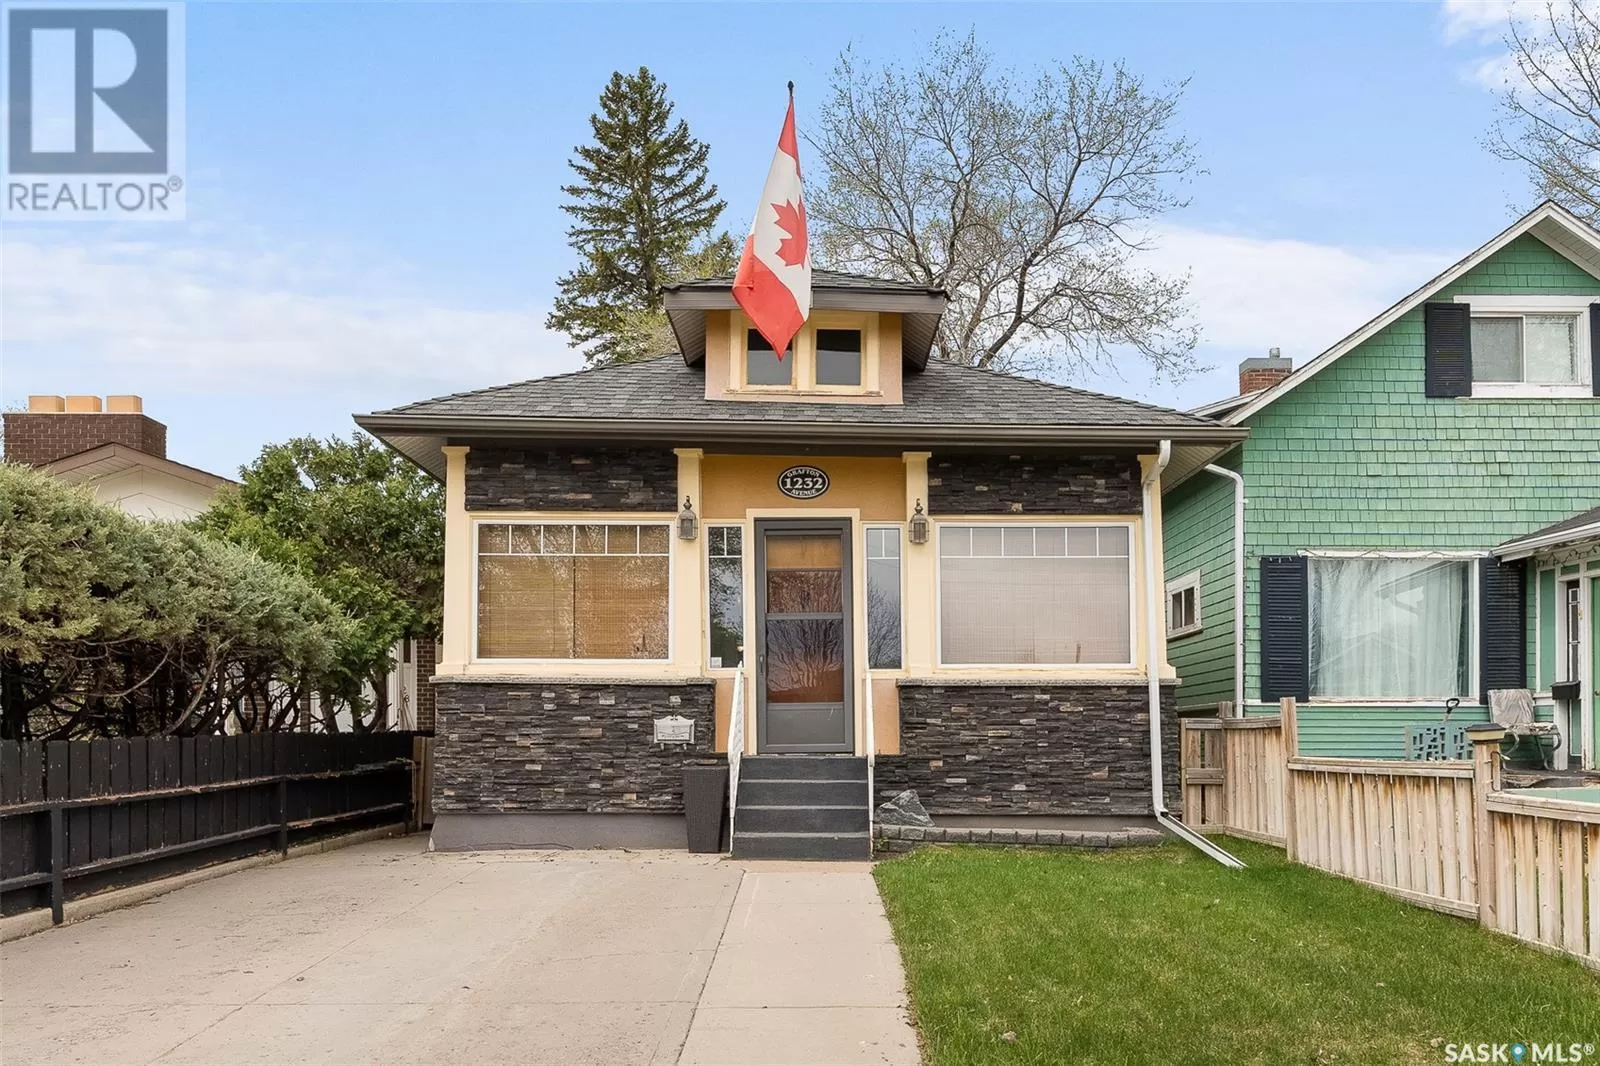 House for rent: 1232 Grafton Avenue, Moose Jaw, Saskatchewan S6H 3S6